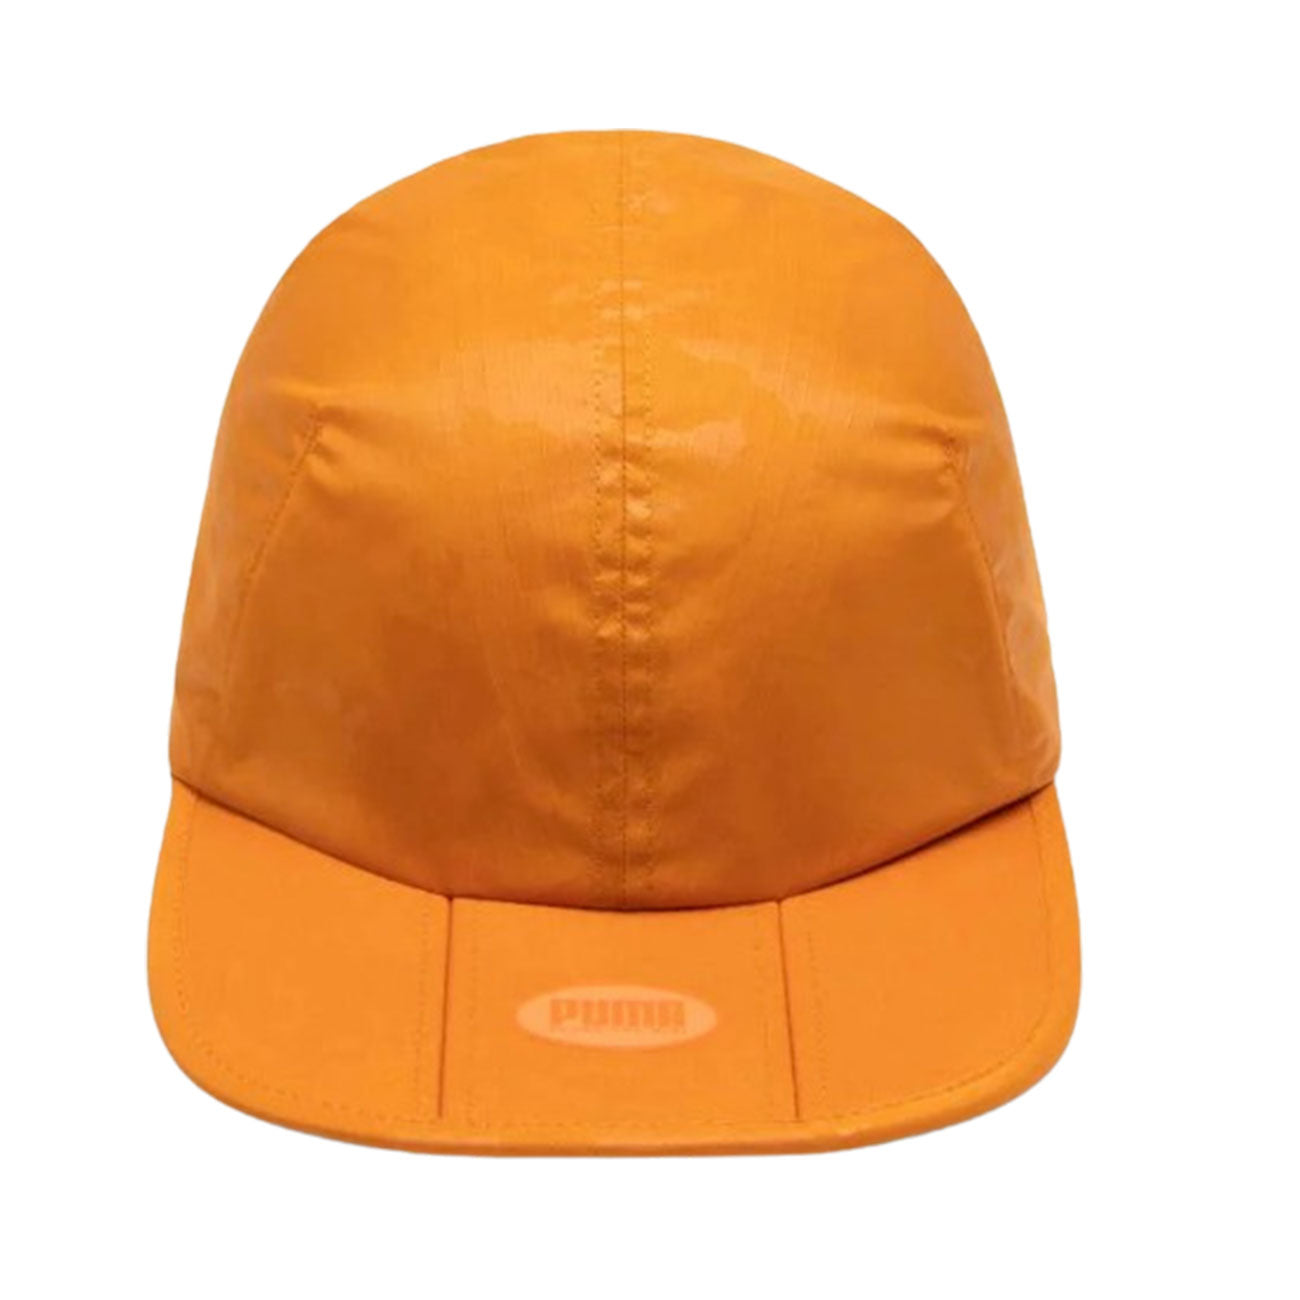 Puma x P.A.M Foldable Cap (Orange Brick)